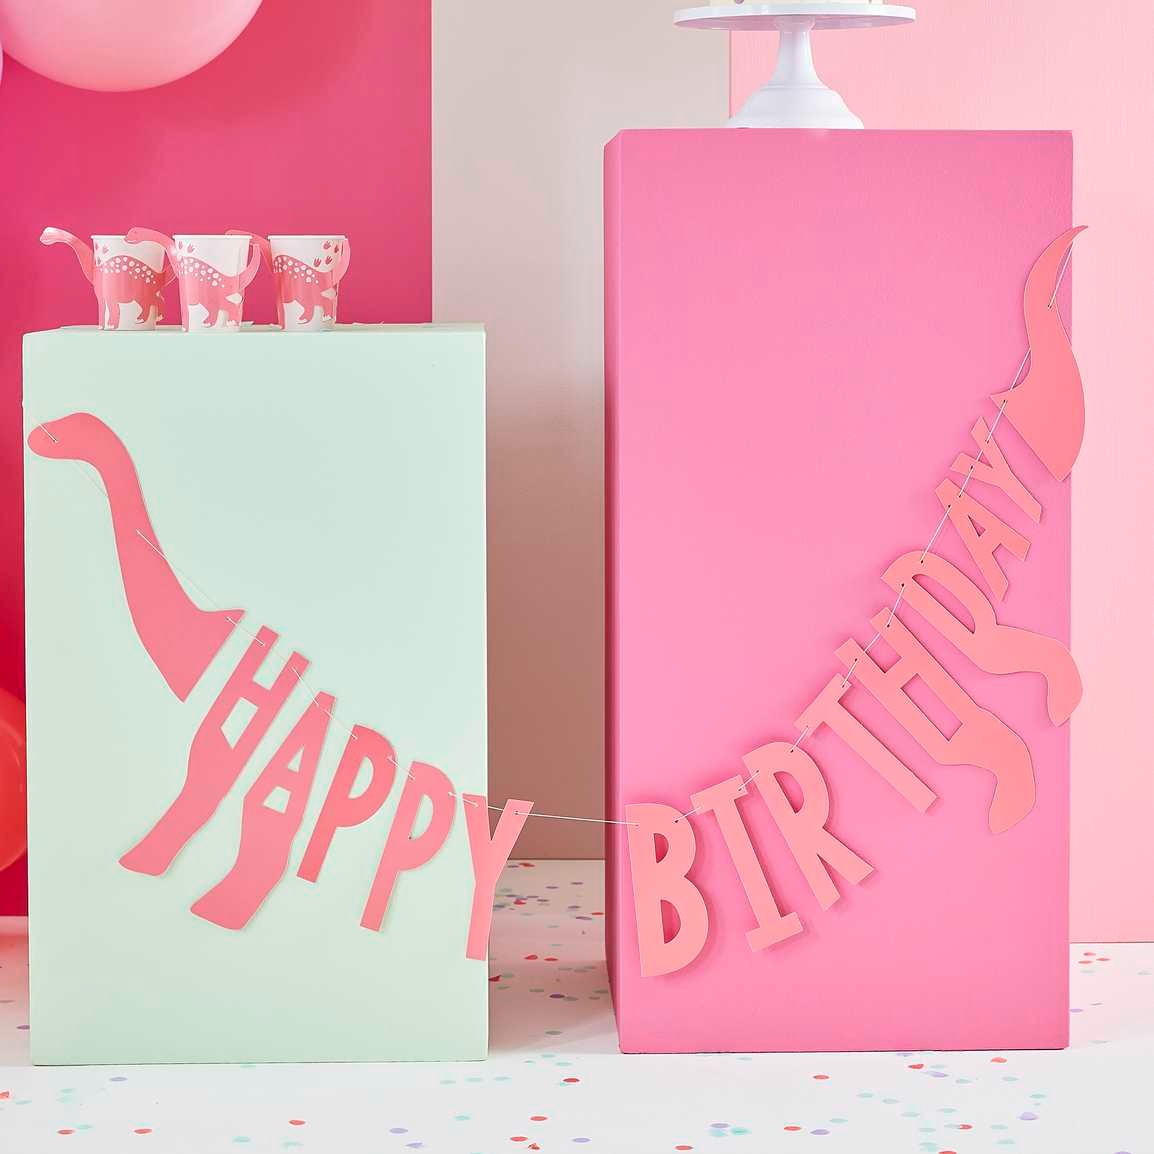 Banner Happy Birthday Dino pink 27cm x 137cm